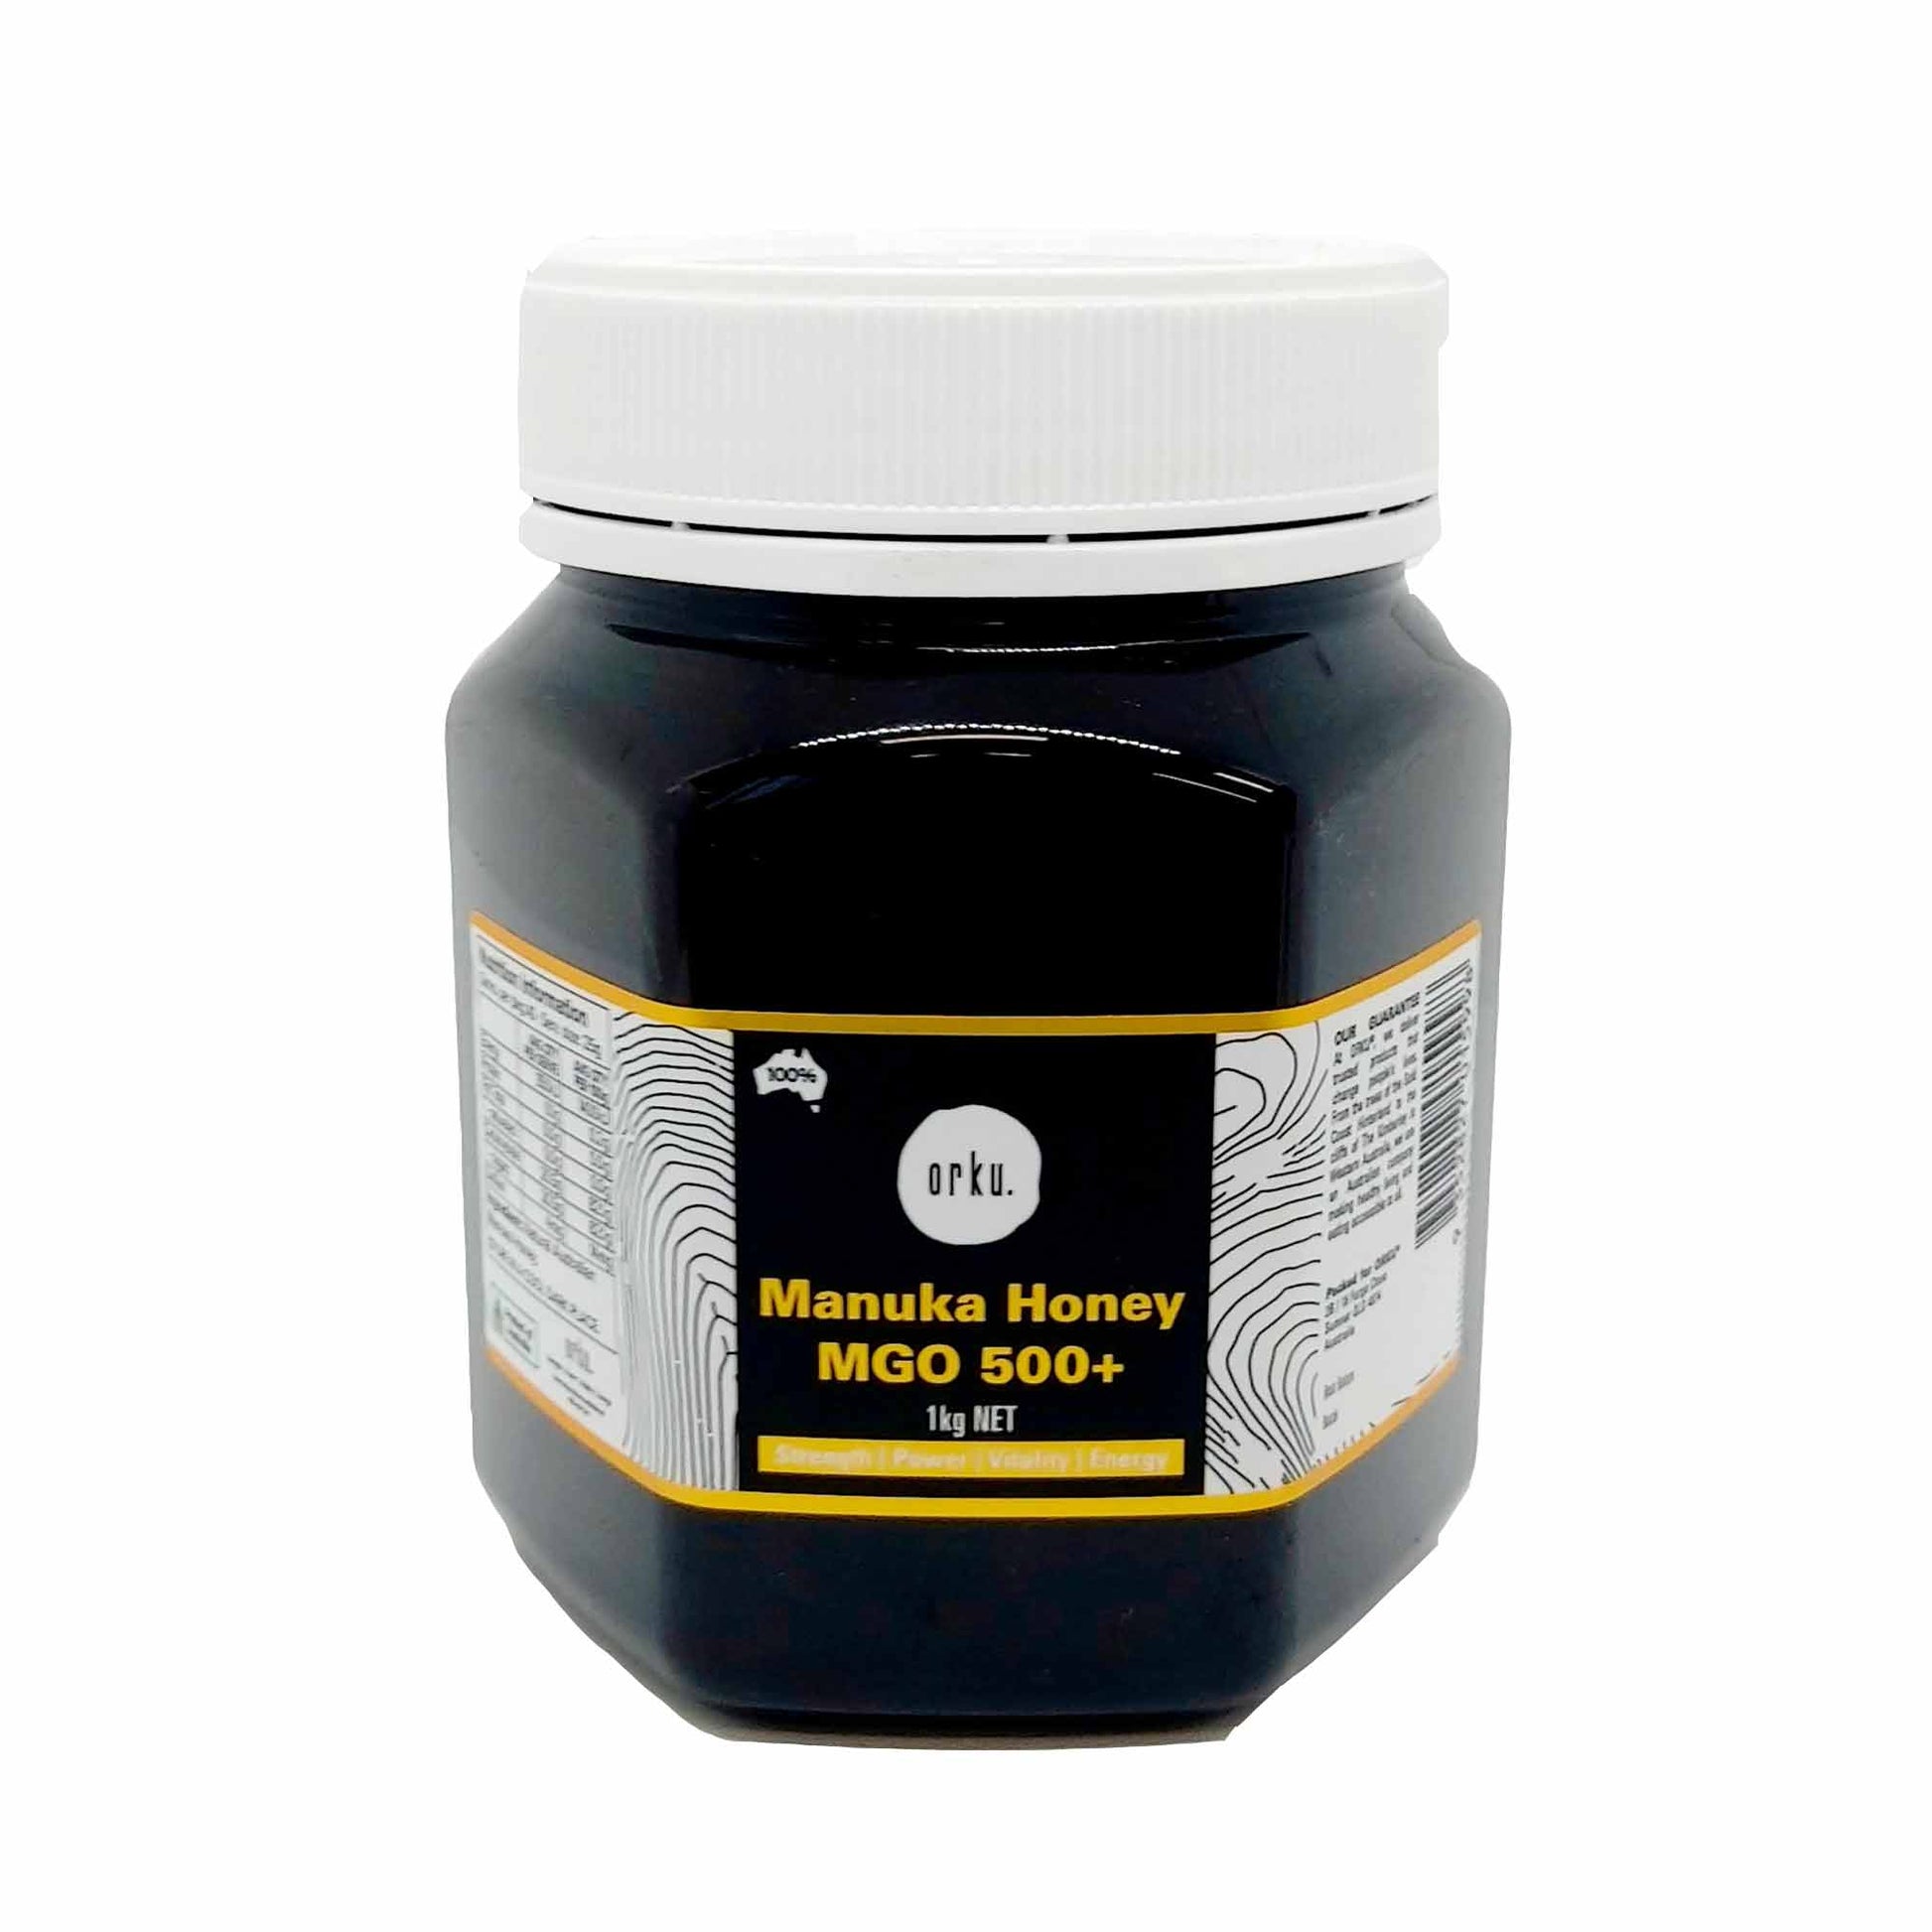 1Kg MGO 500+ Australian Manuka Honey - 100% Raw Natural Pure Jelly Bush